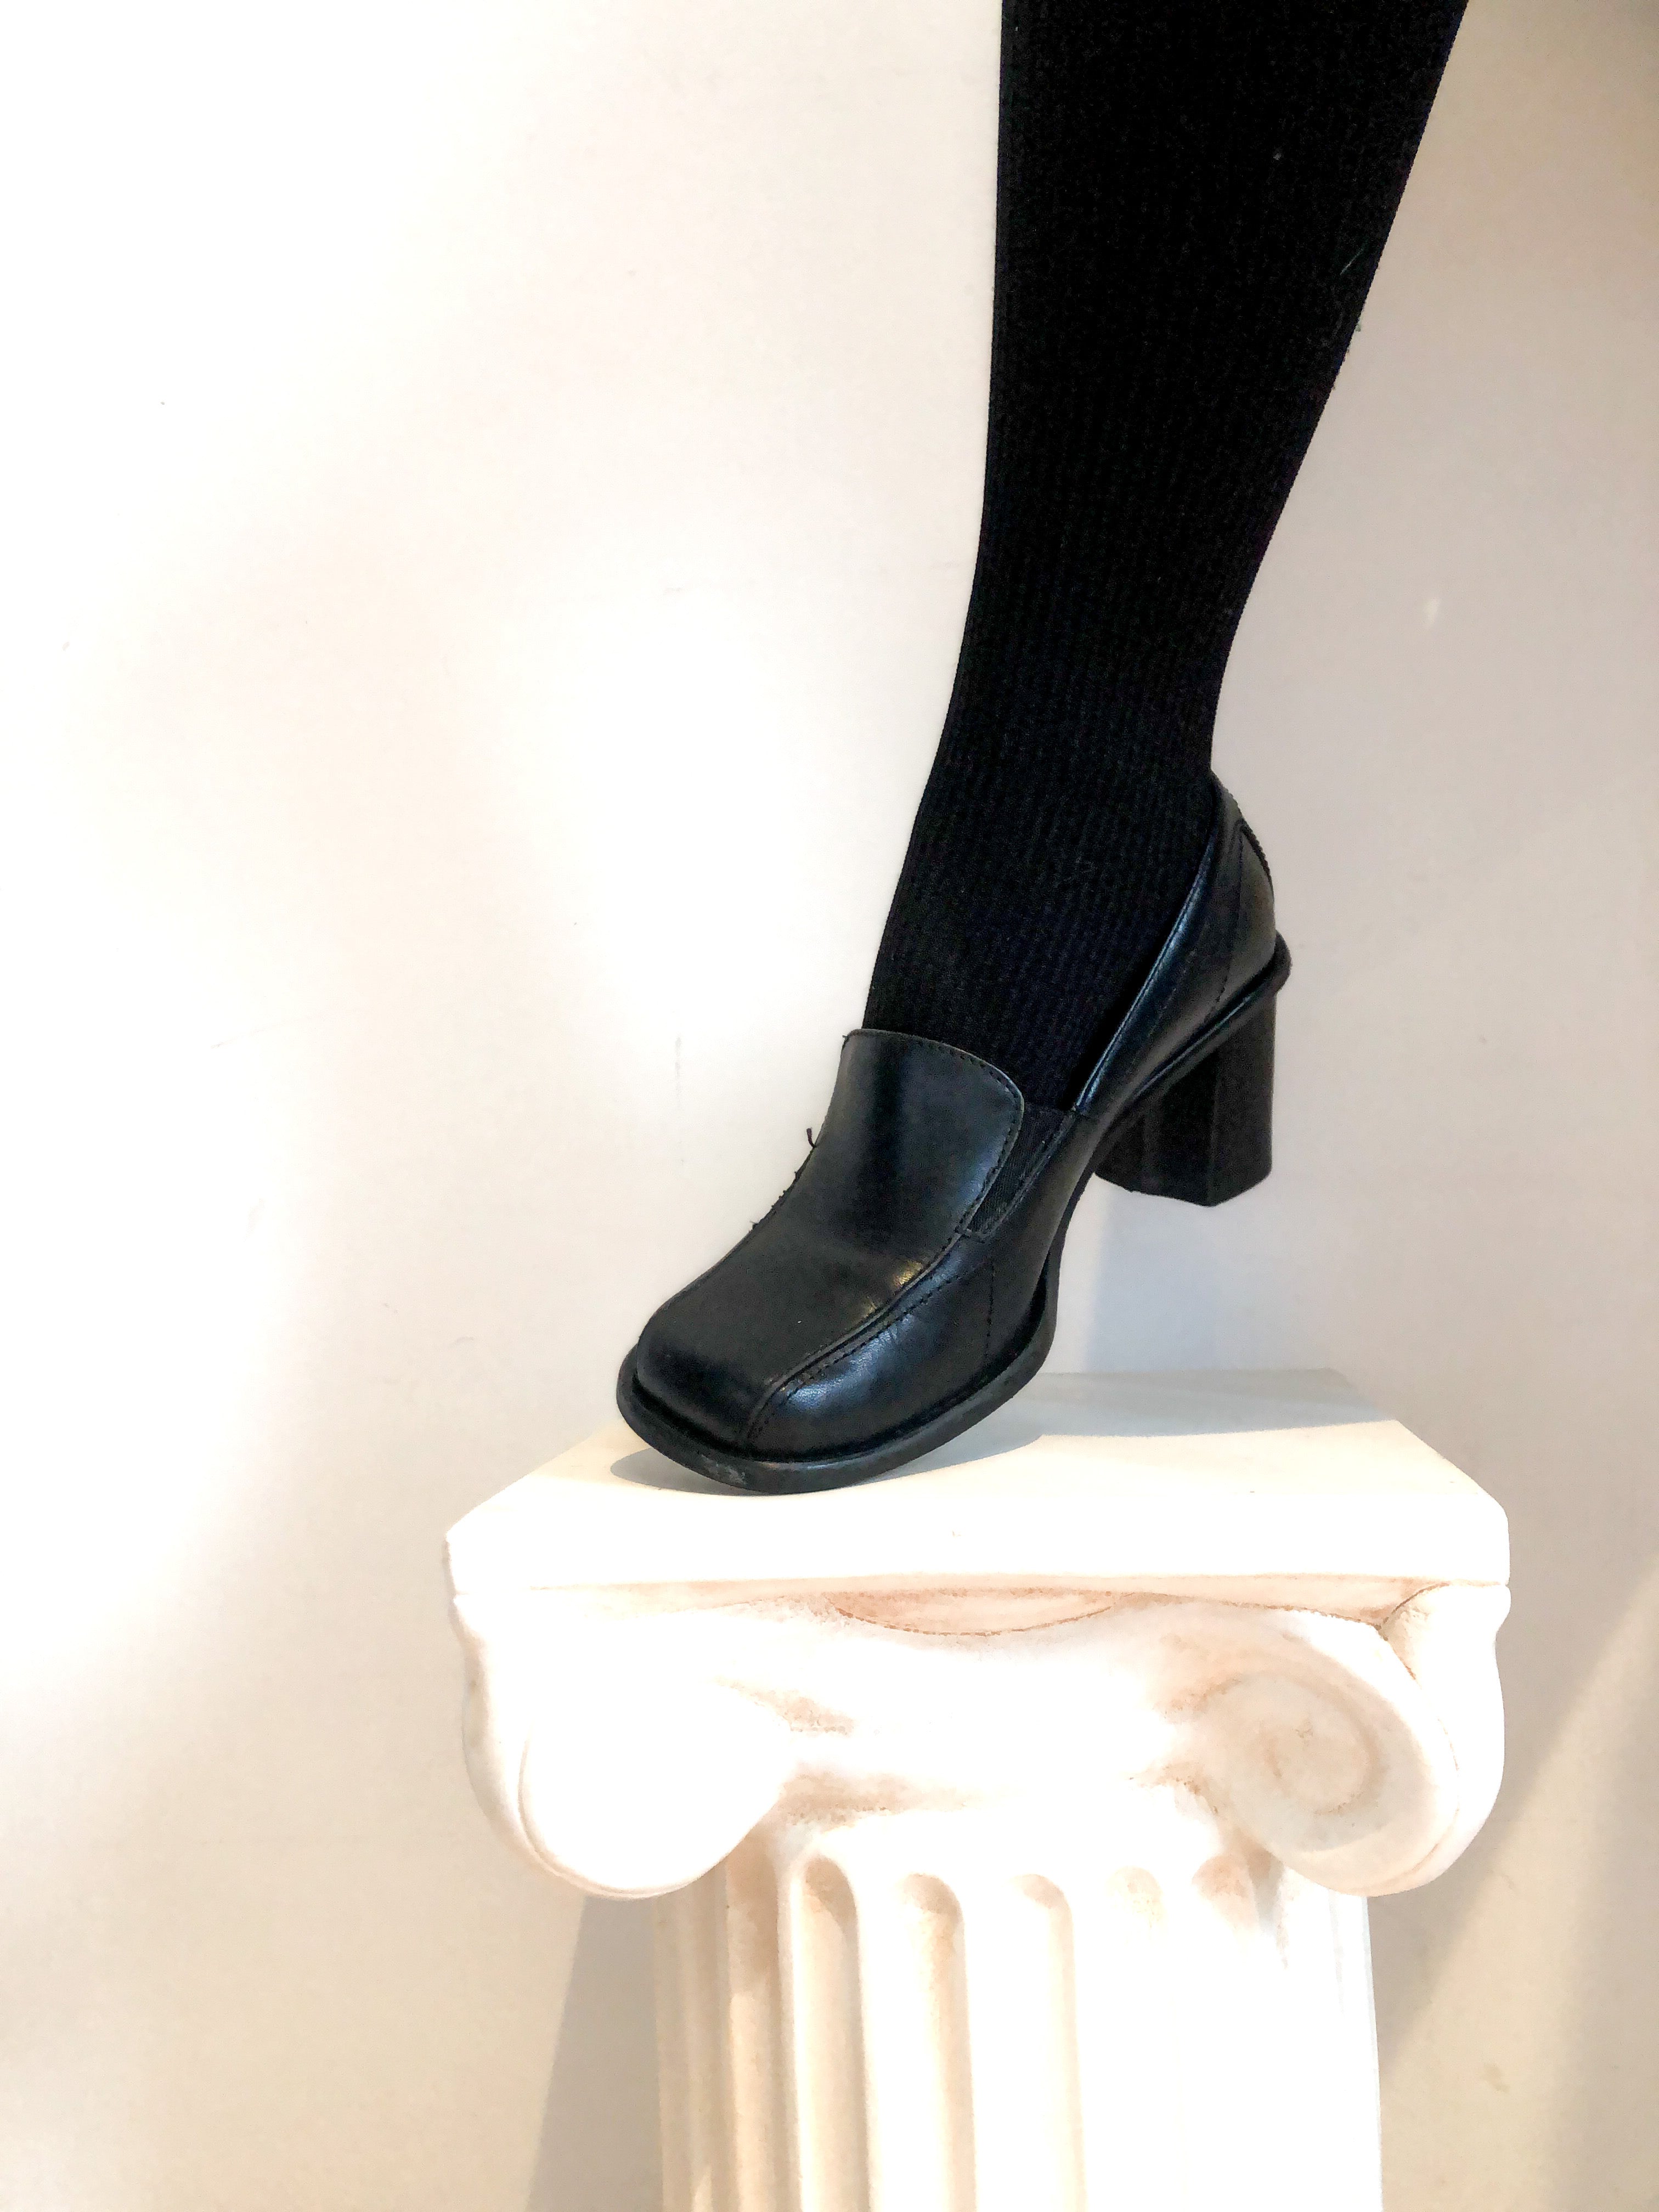 Black Leather Loafer Chunky Heel Shoe, US Size 7 Women's, 1990s Vintage Leather Block Heel by K Studio